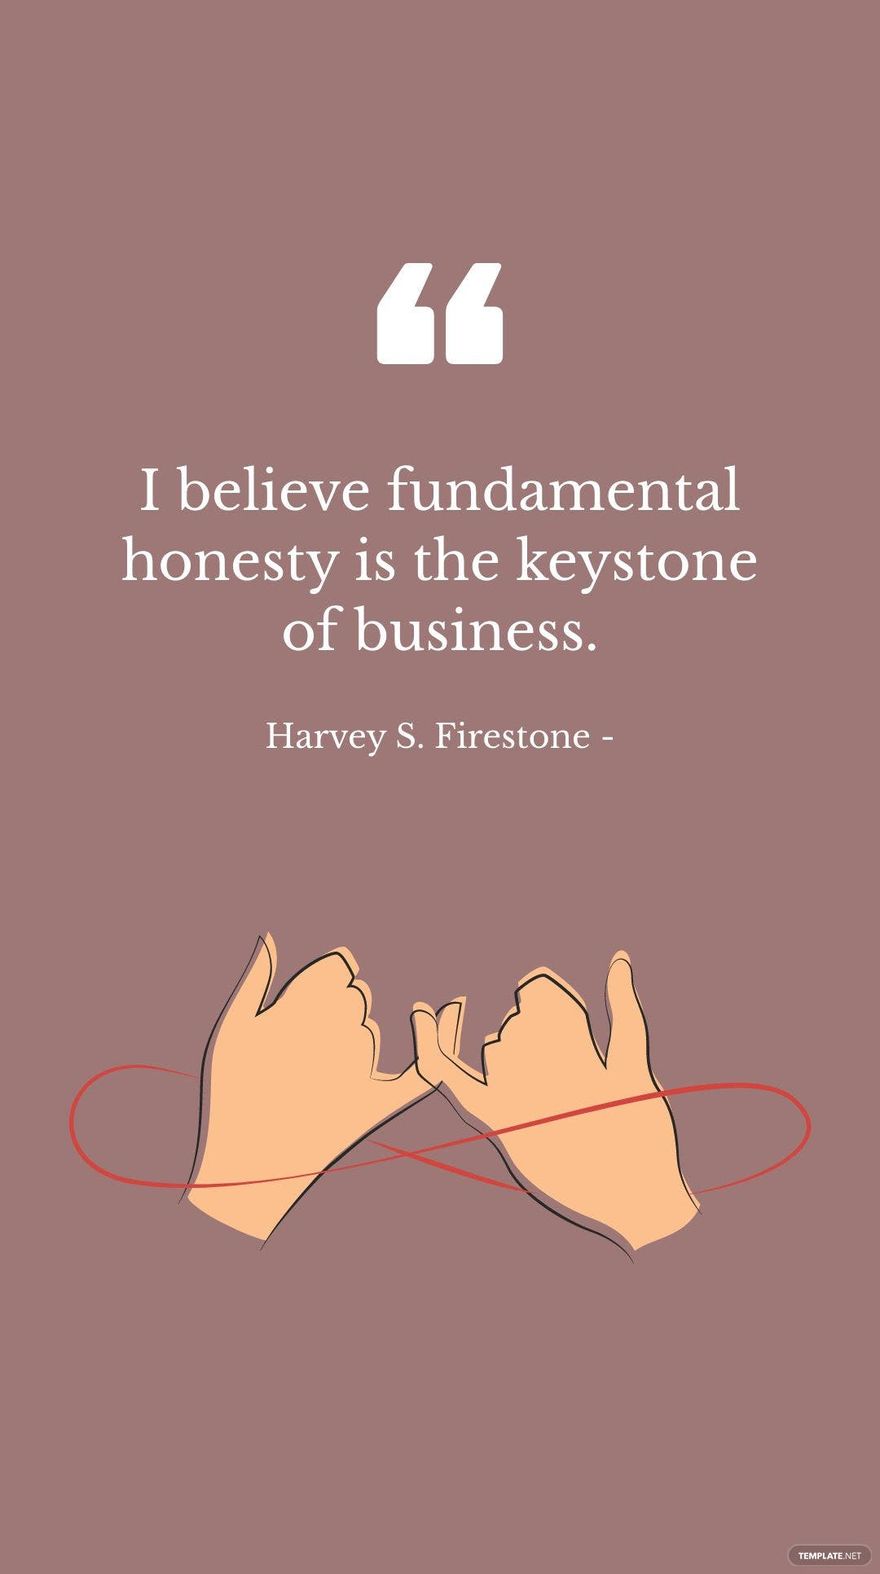 Harvey S. Firestone - I believe fundamental honesty is the keystone of business.